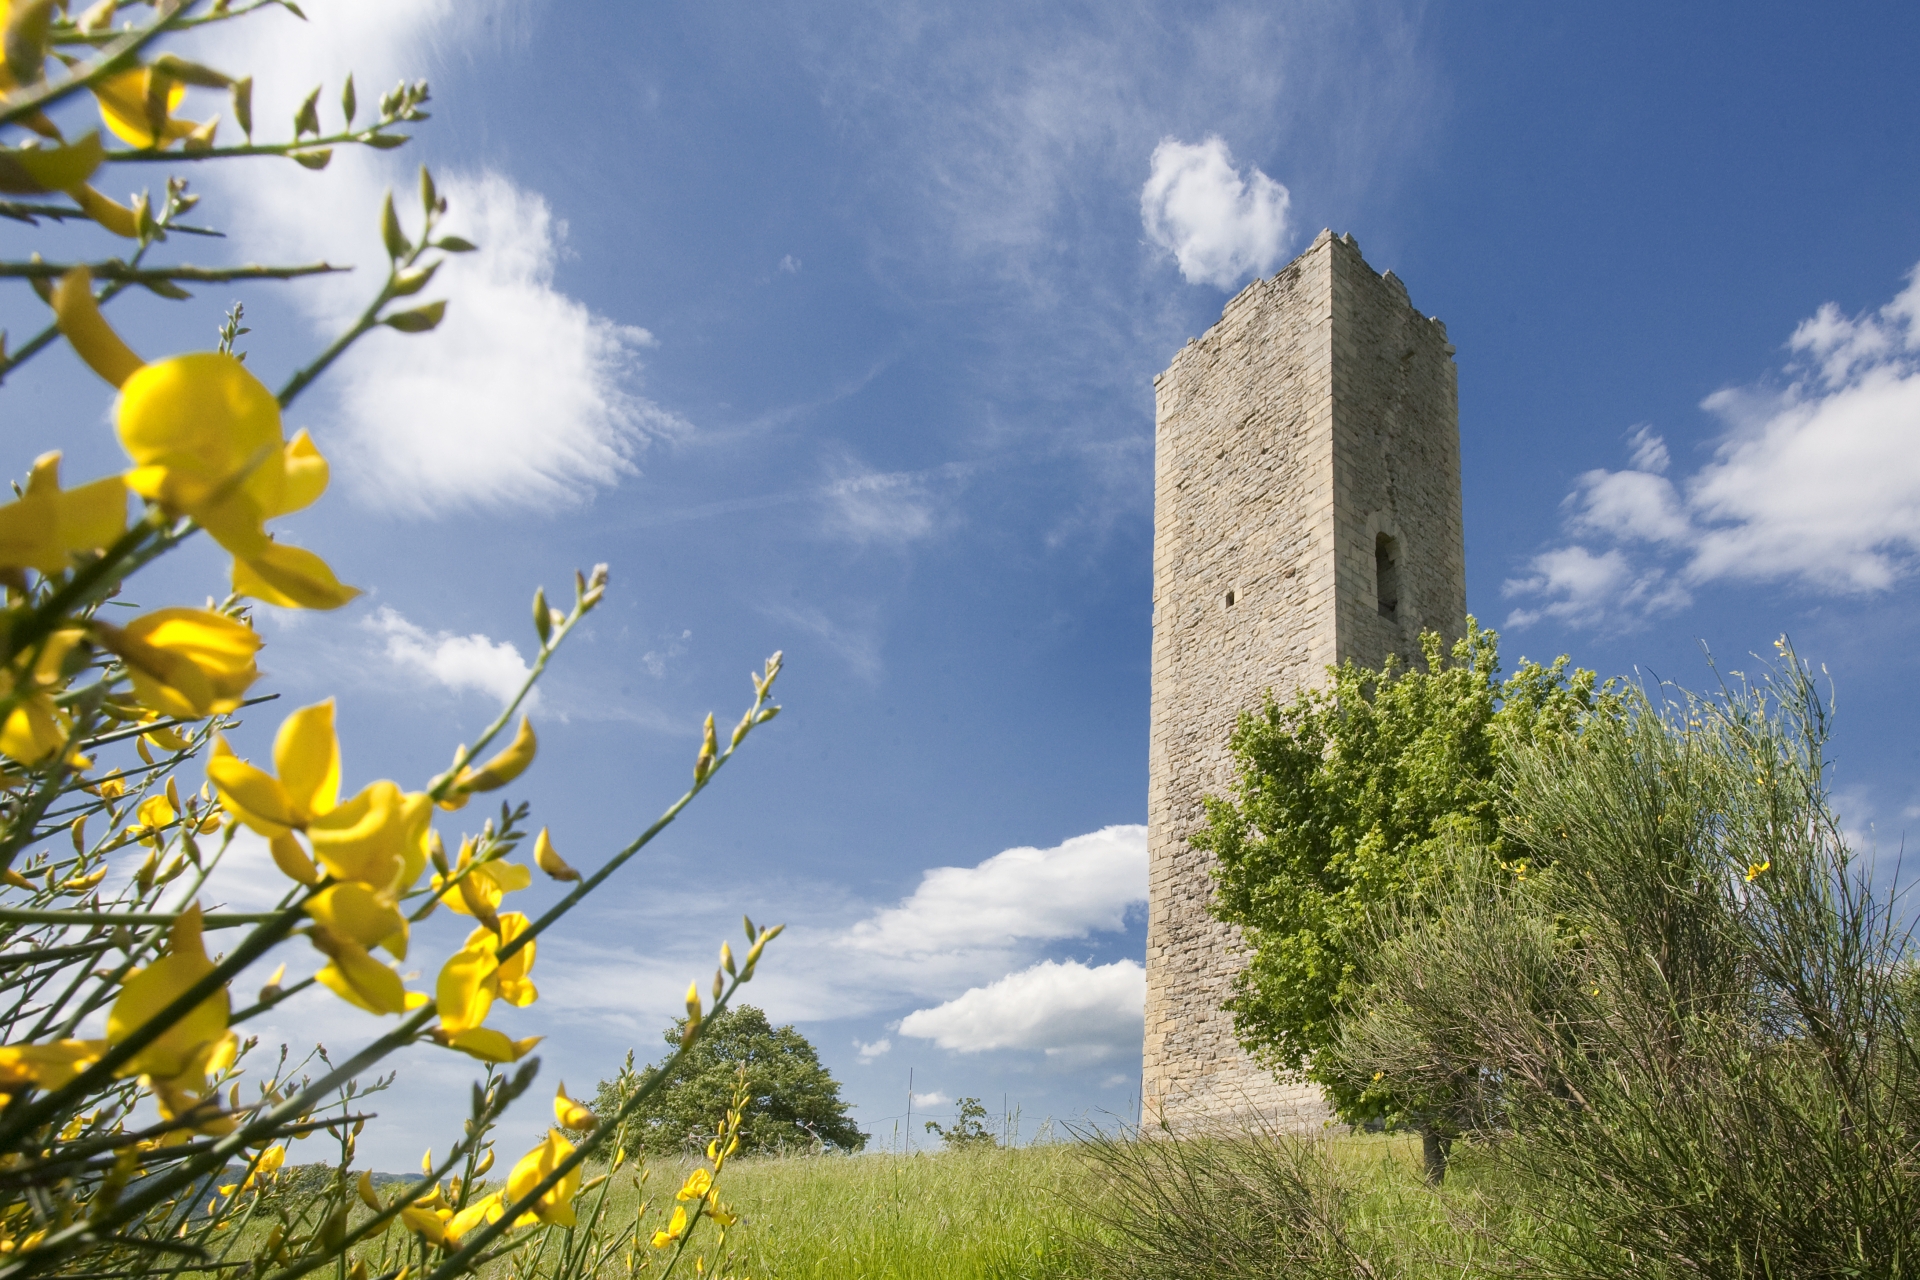 Pennabilli | torre di Bascio photo by Paritani